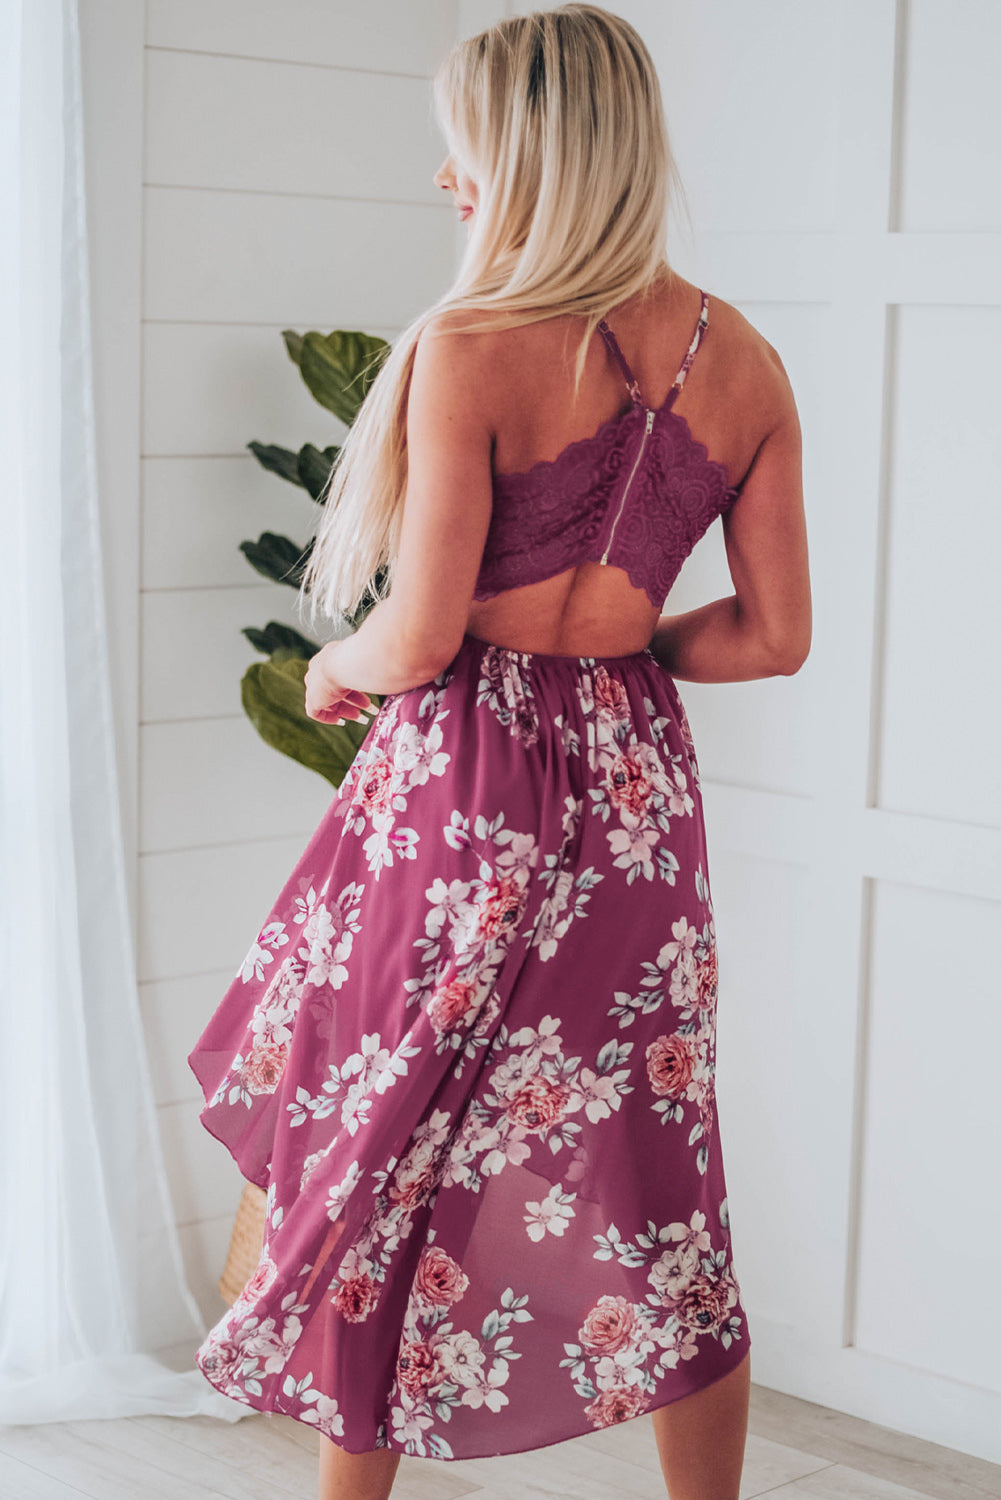 Floral Cutout High-Low Lace Back Dress